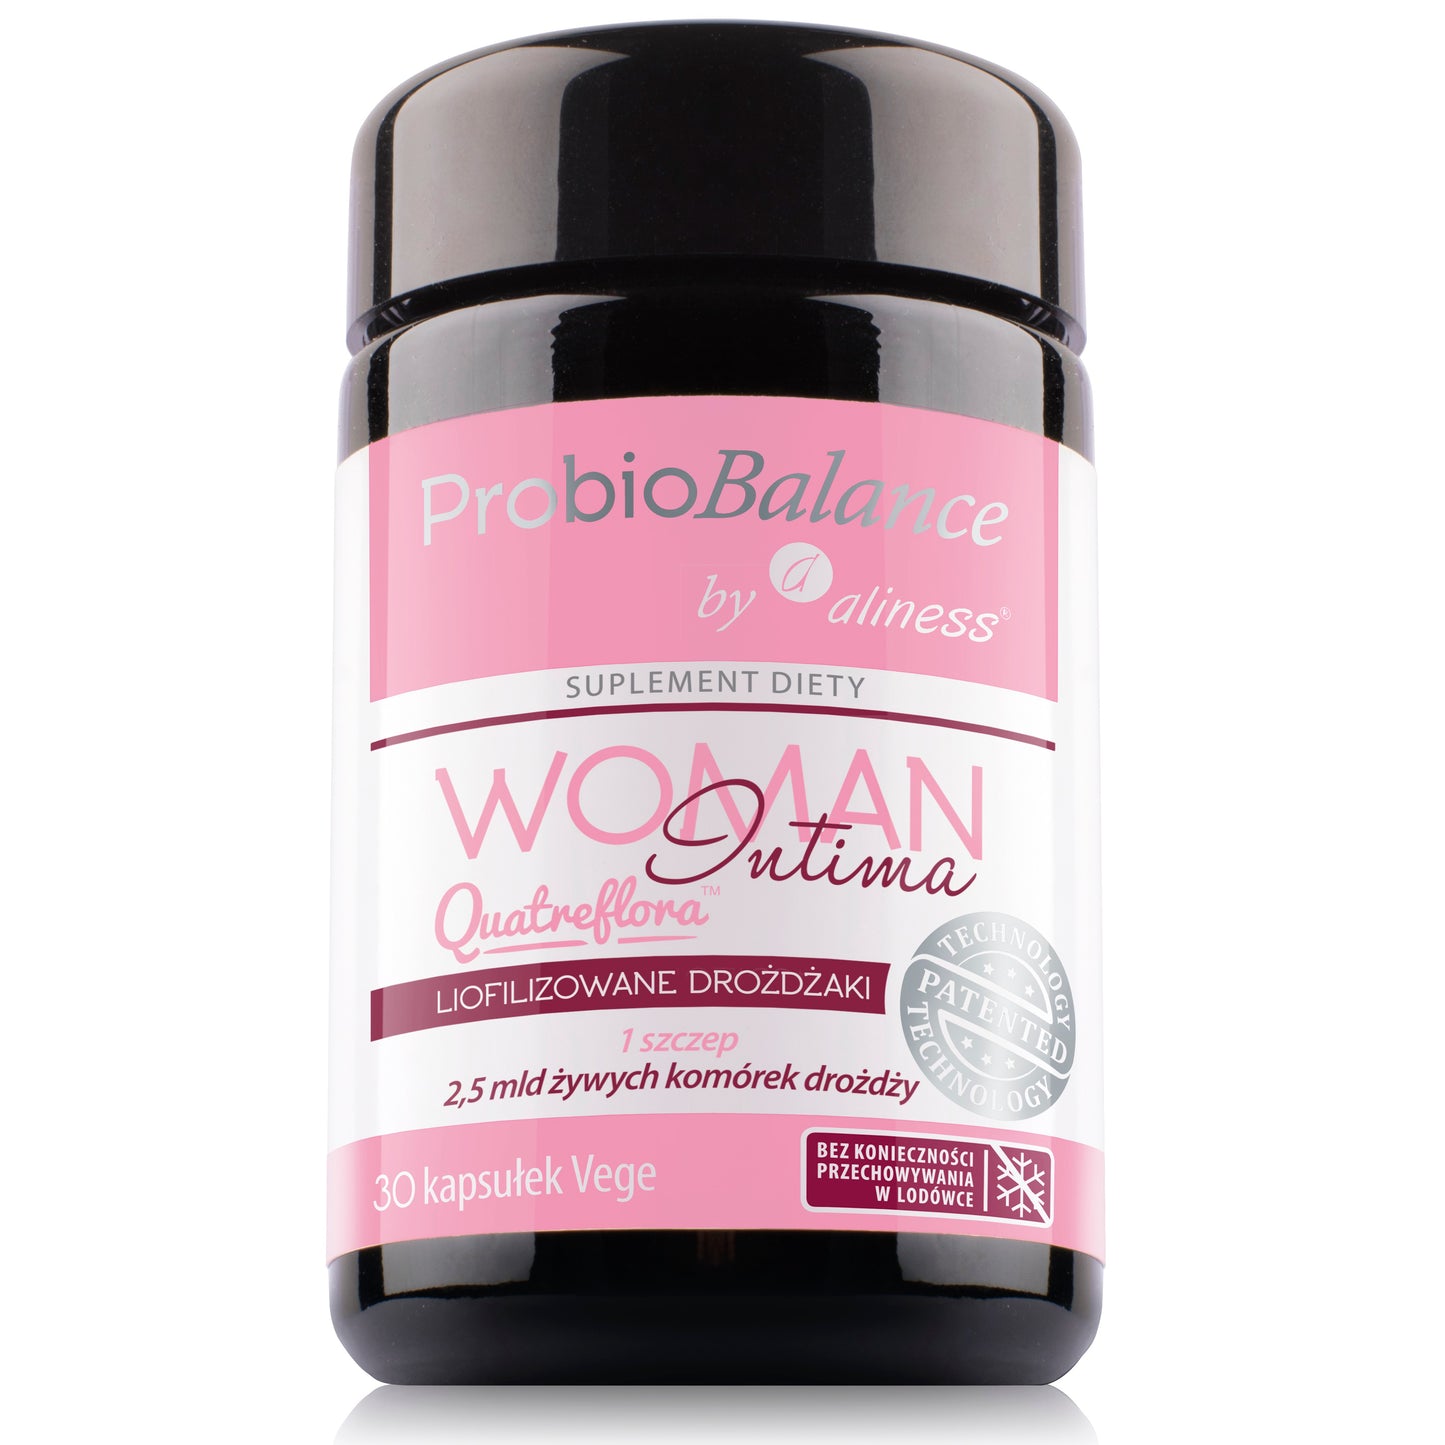 ProbioBalance Woman Intima Quatreflora probiotics & prebiotics, 30 capsules. Aliness Vegan Probiotics